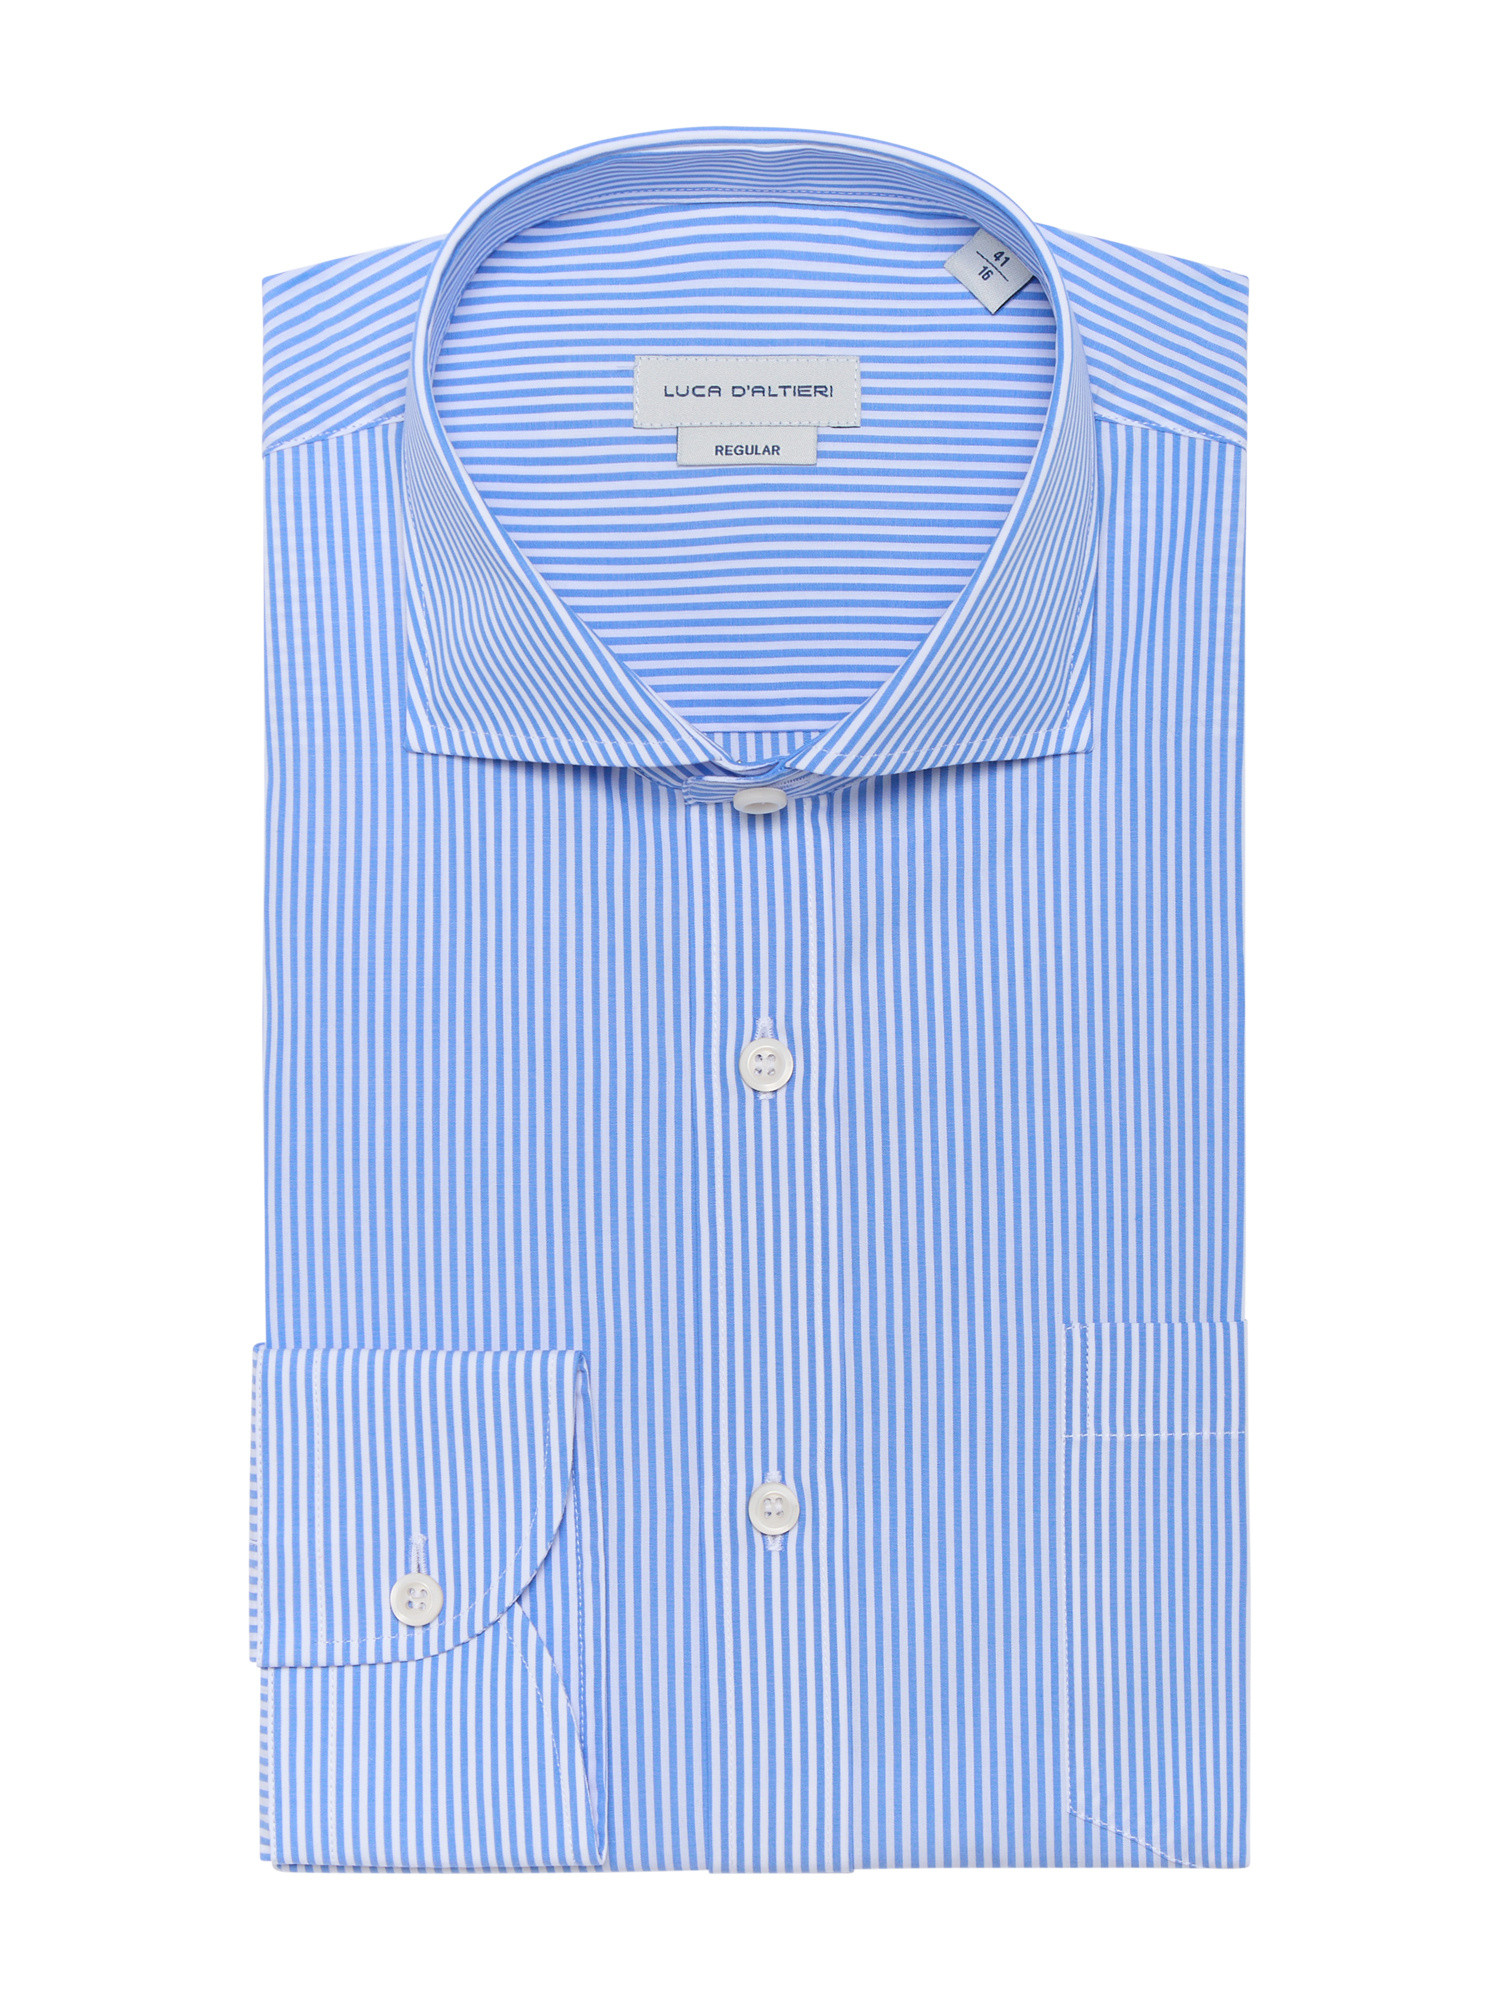 Luca D'Altieri - Regular fit casual shirt in pure cotton poplin, Light Blue, large image number 0